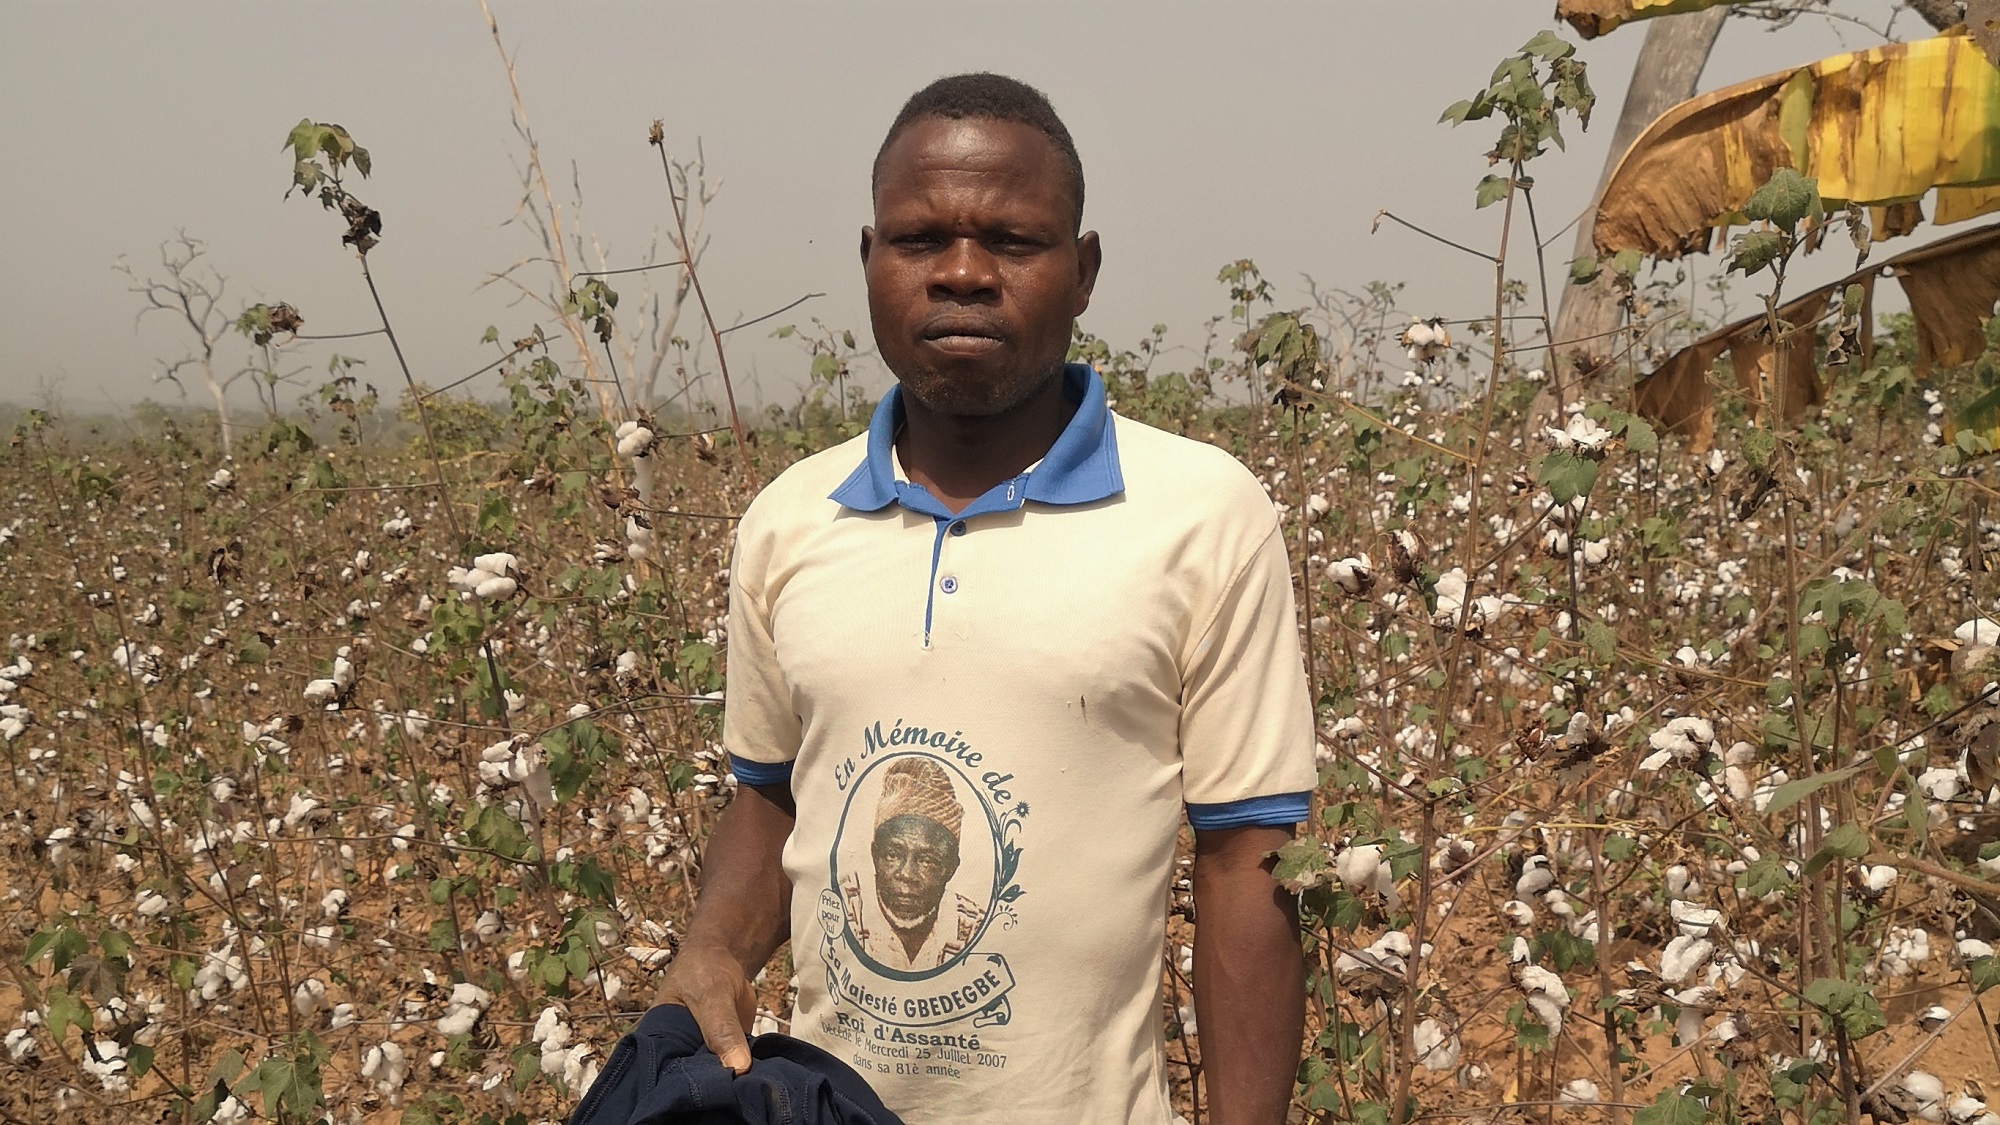 Tokponwe Nicaise, President of Glazoue Organic Cotton Growers Association, next to his cotton field. Credit PAN UK.